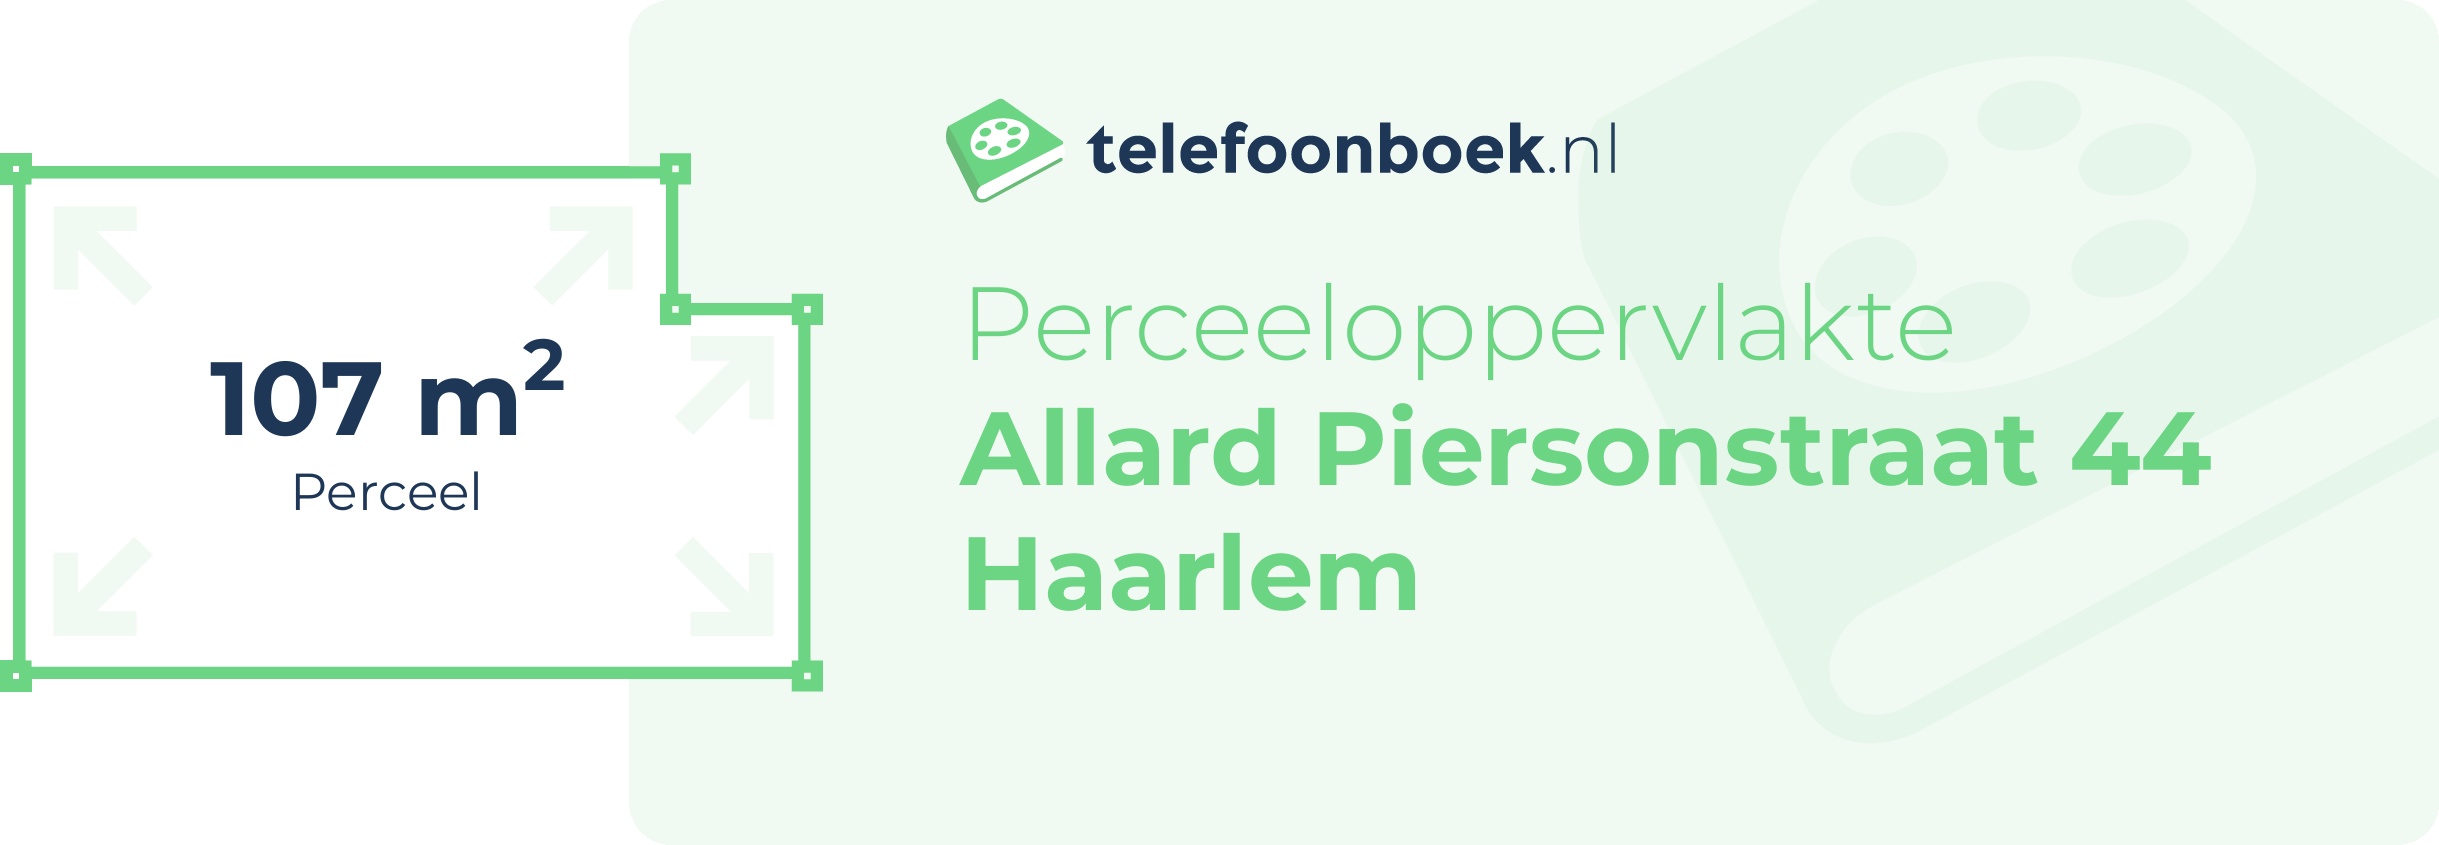 Perceeloppervlakte Allard Piersonstraat 44 Haarlem